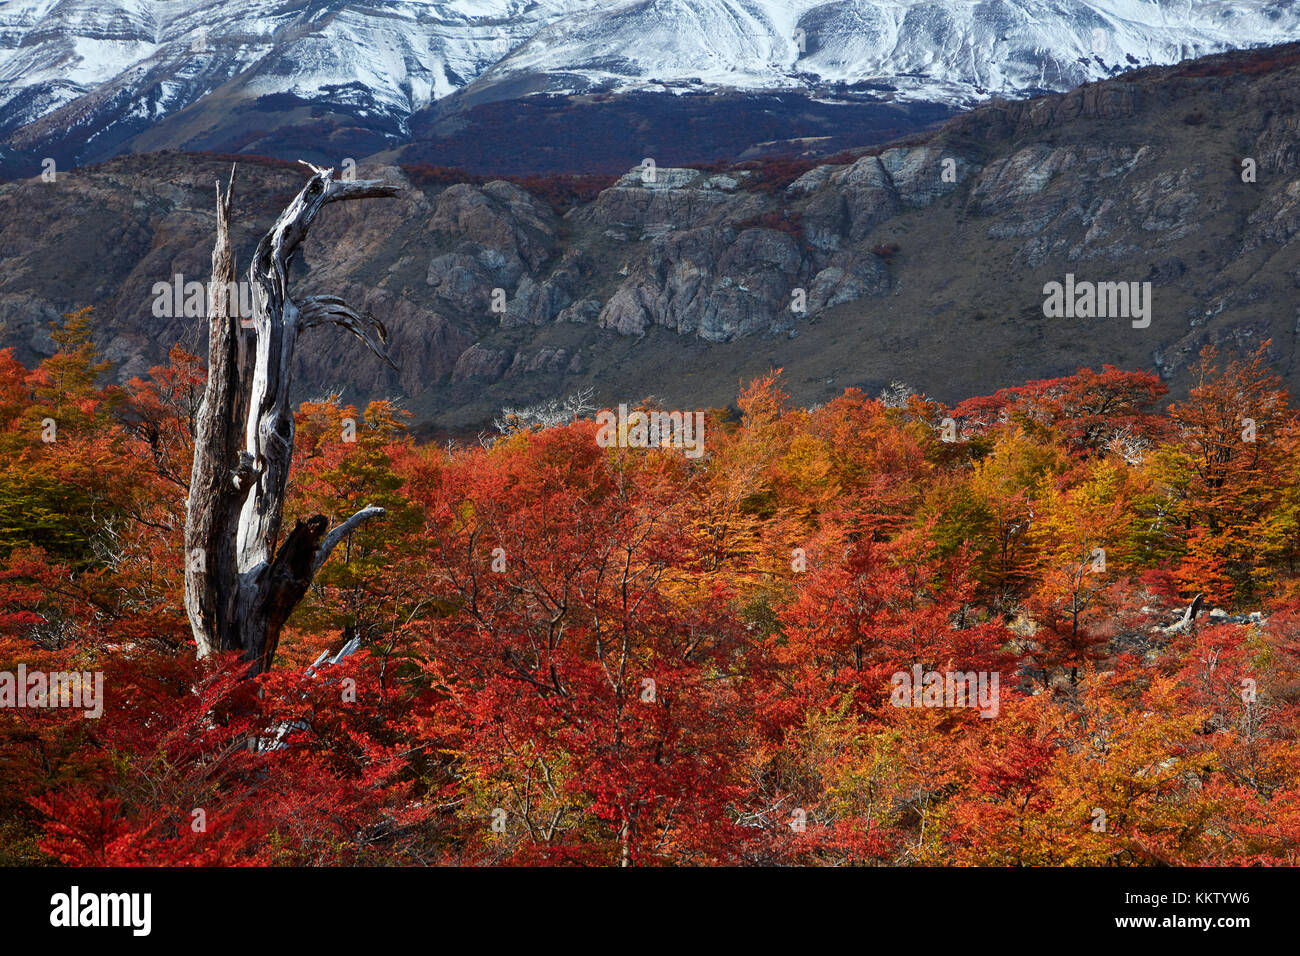 Lenga trees in autumn, near El Chalten, Parque Nacional Los Glaciares, Patagonia, Argentina, South America (MR) Stock Photo